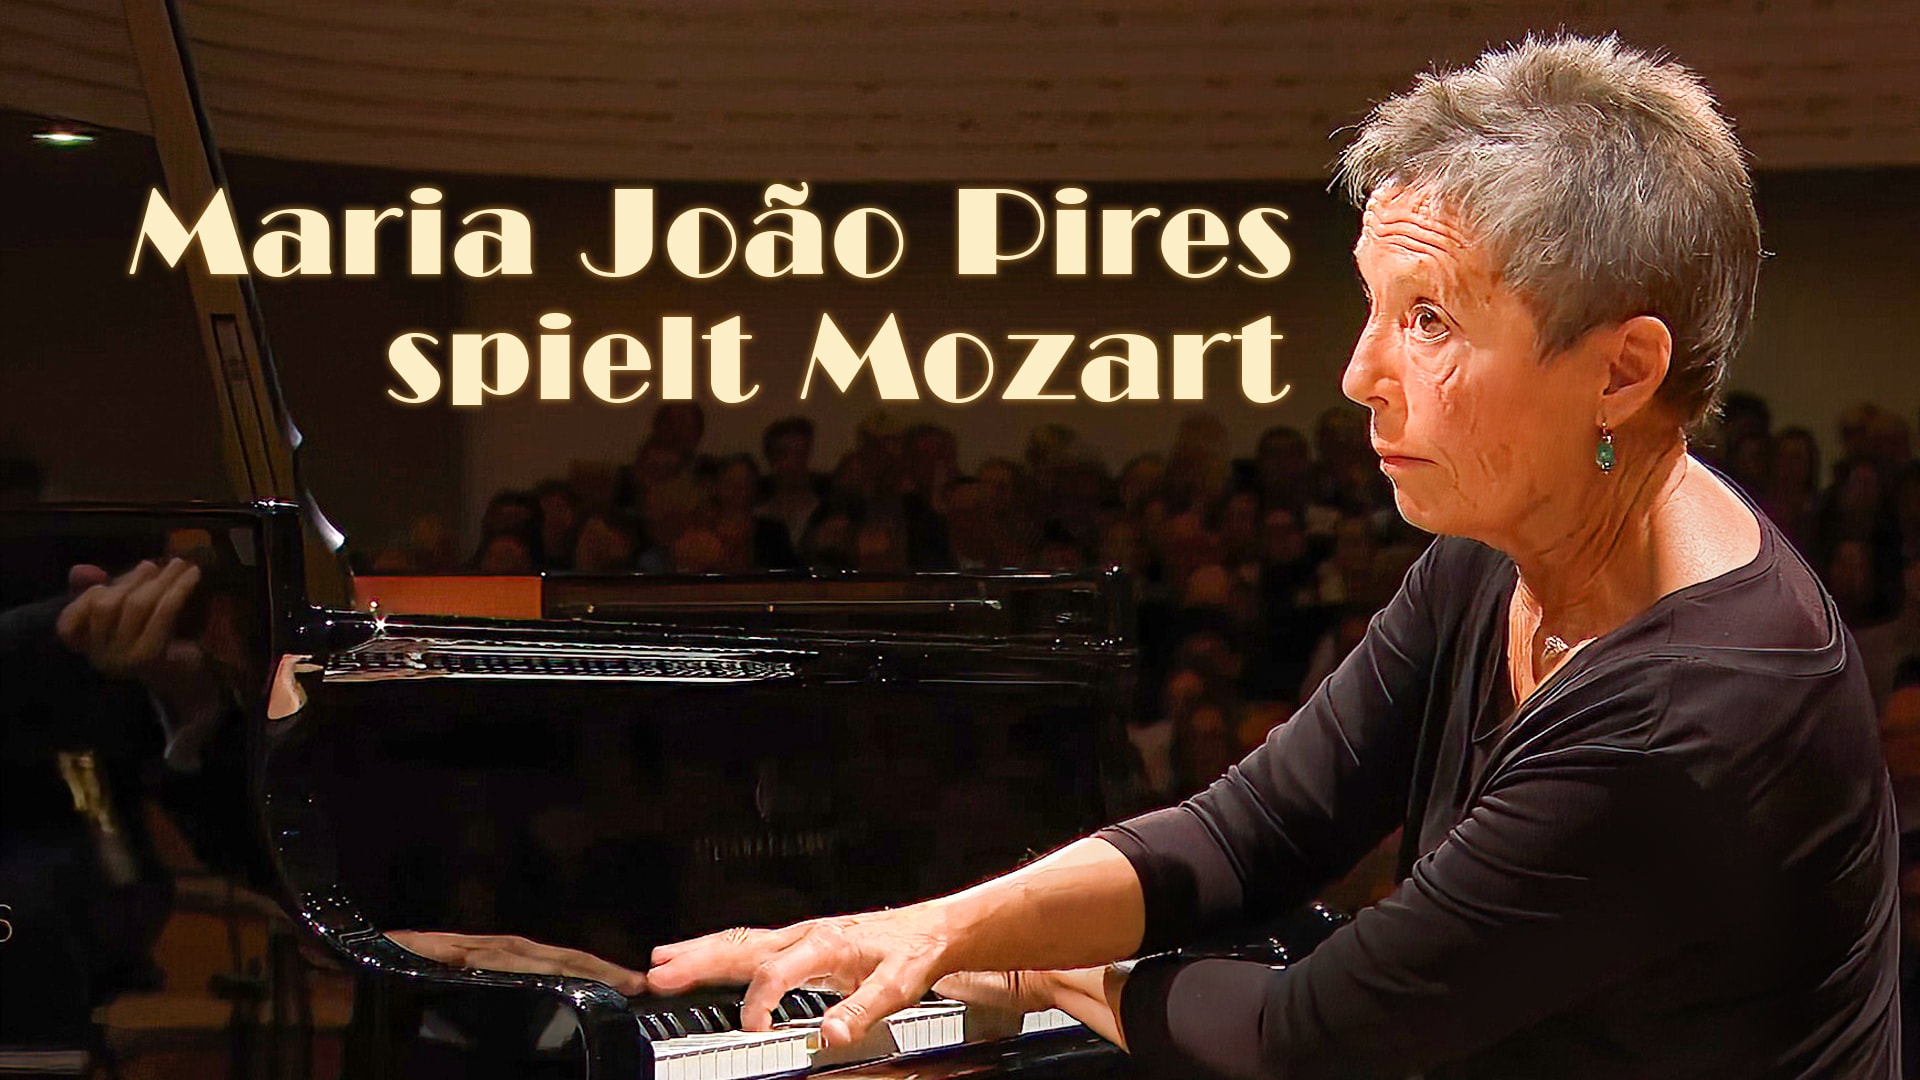 Maria João Pires spielt Mozart